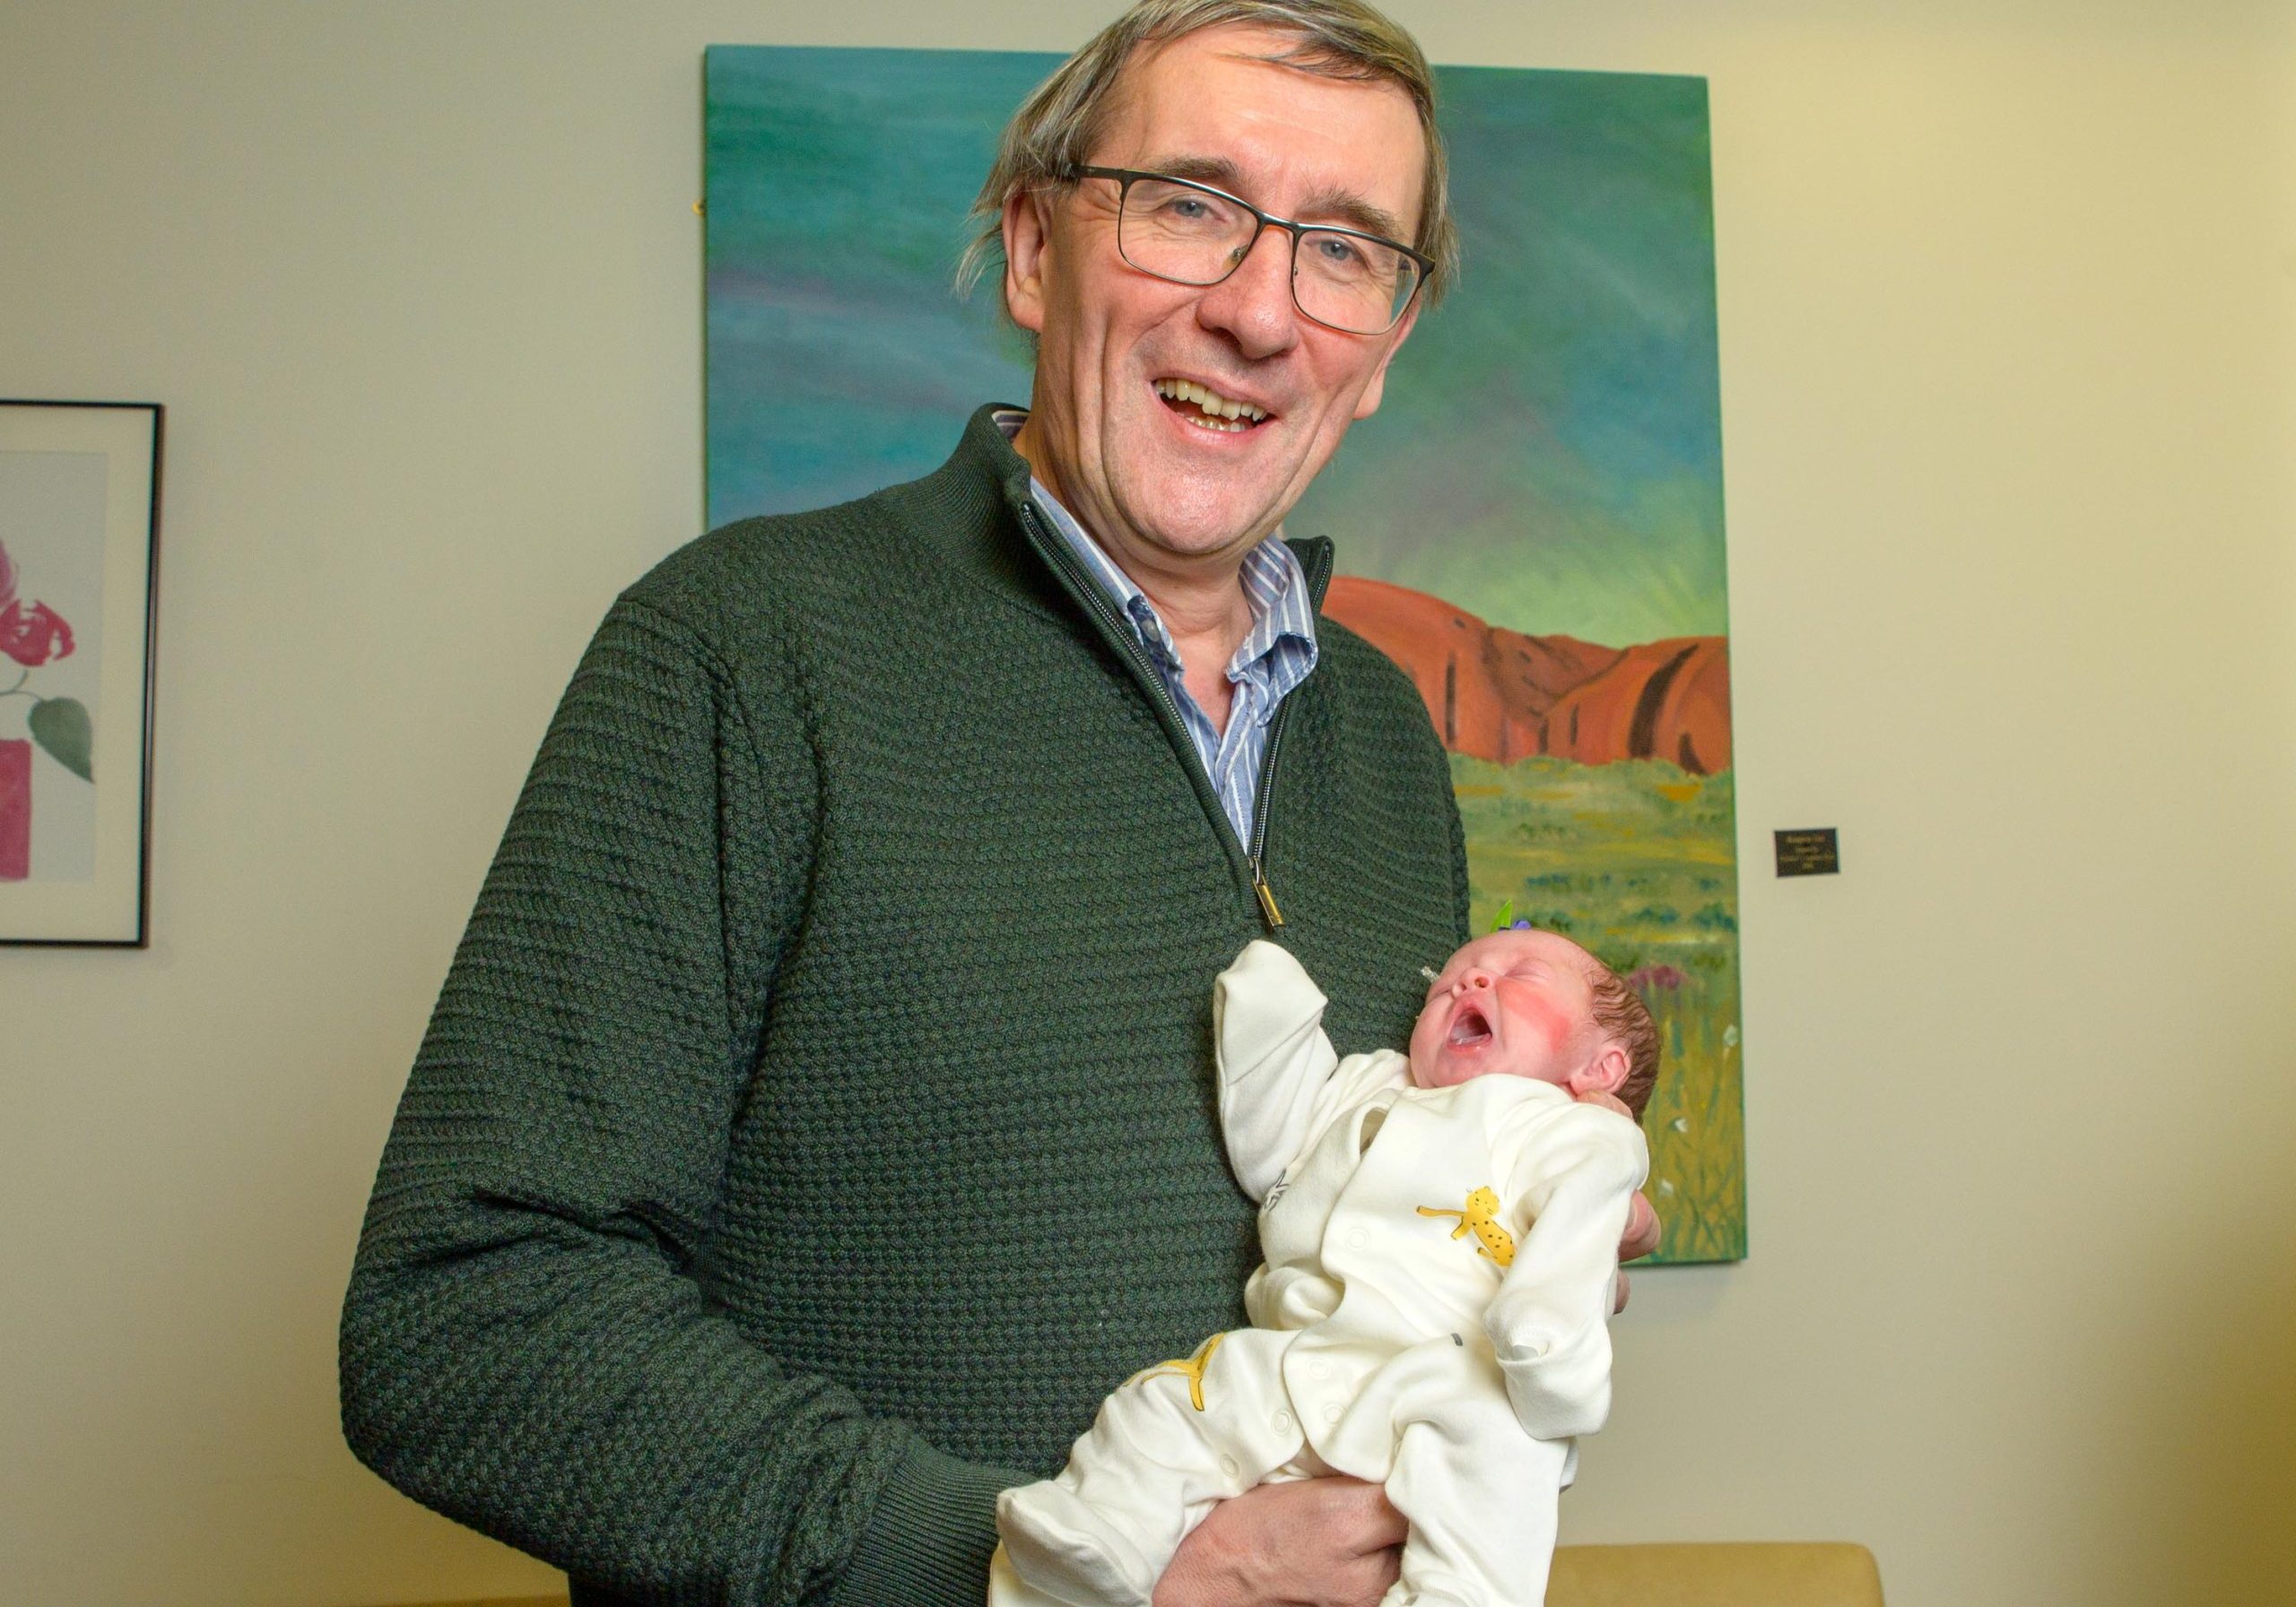 Professor Plant with baby Croía, newborn daughter of his patient Colette Hawe